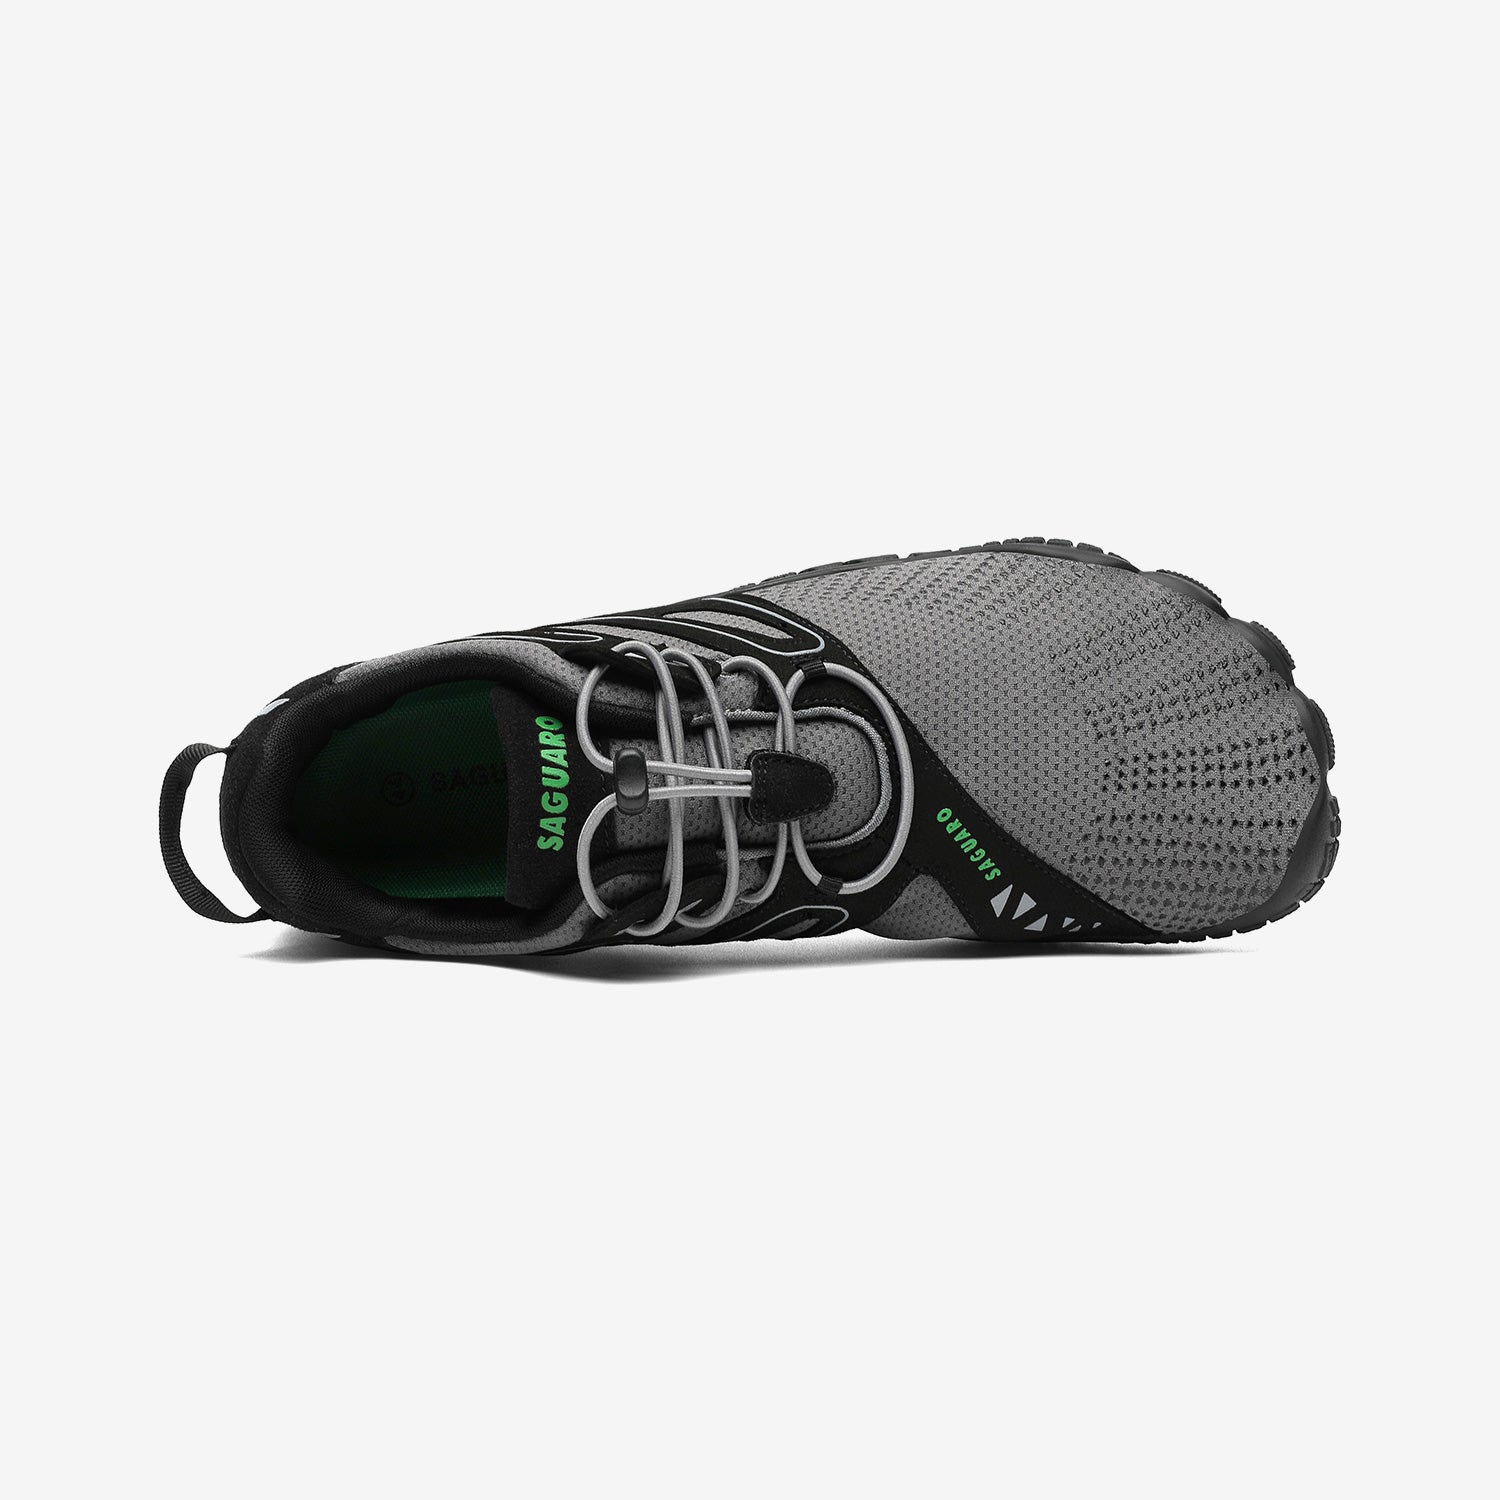 Vitality IV - Barefoot Shoes